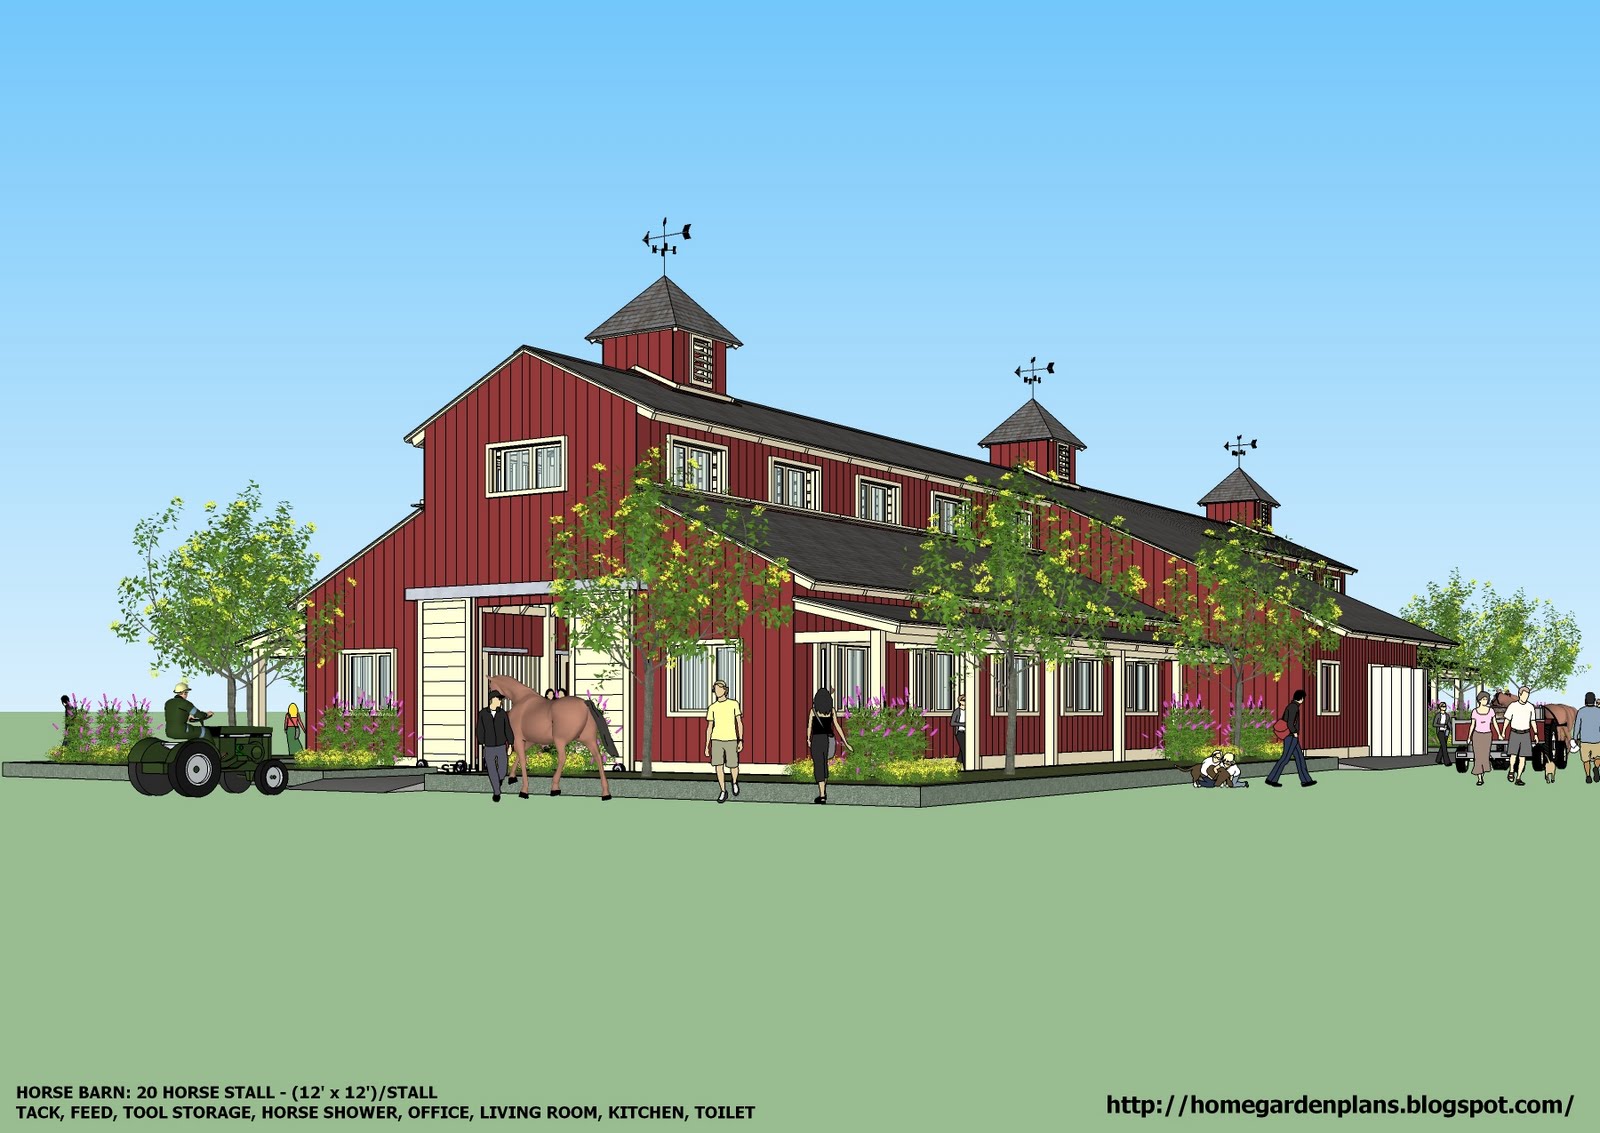 home garden plans: b20h - large horse barn for 20 horse